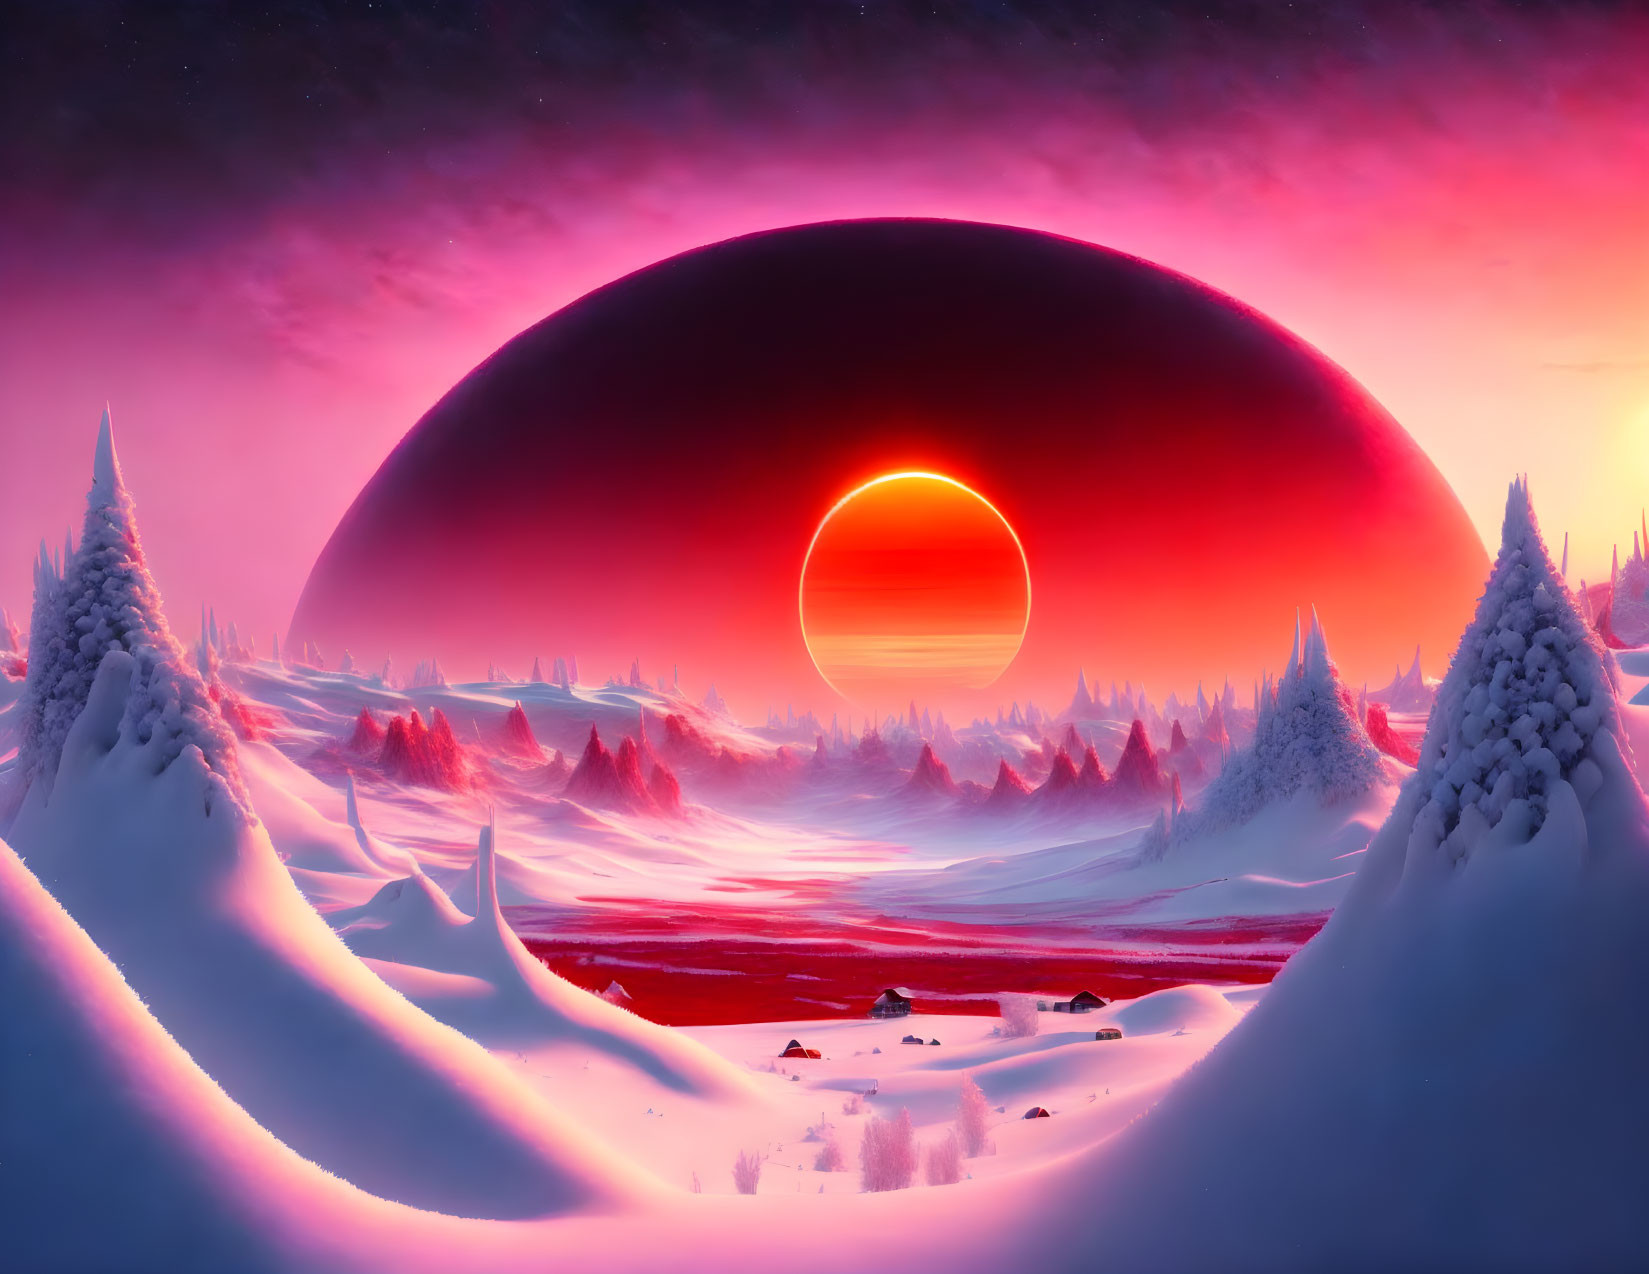 Alien Winter Landscape under a Red Dwarf